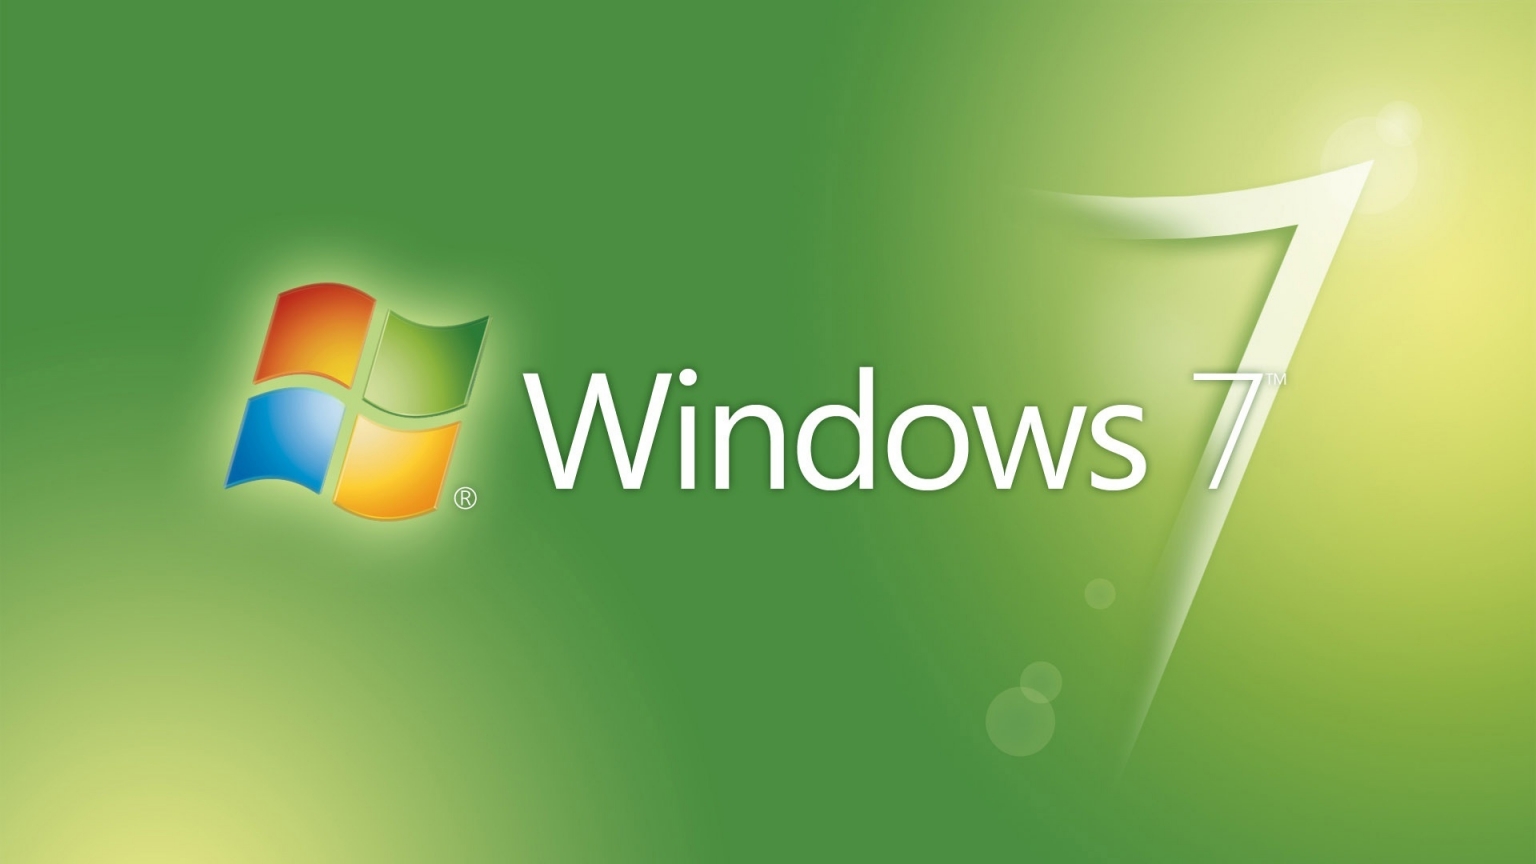 Windows 7 Green for 1536 x 864 HDTV resolution